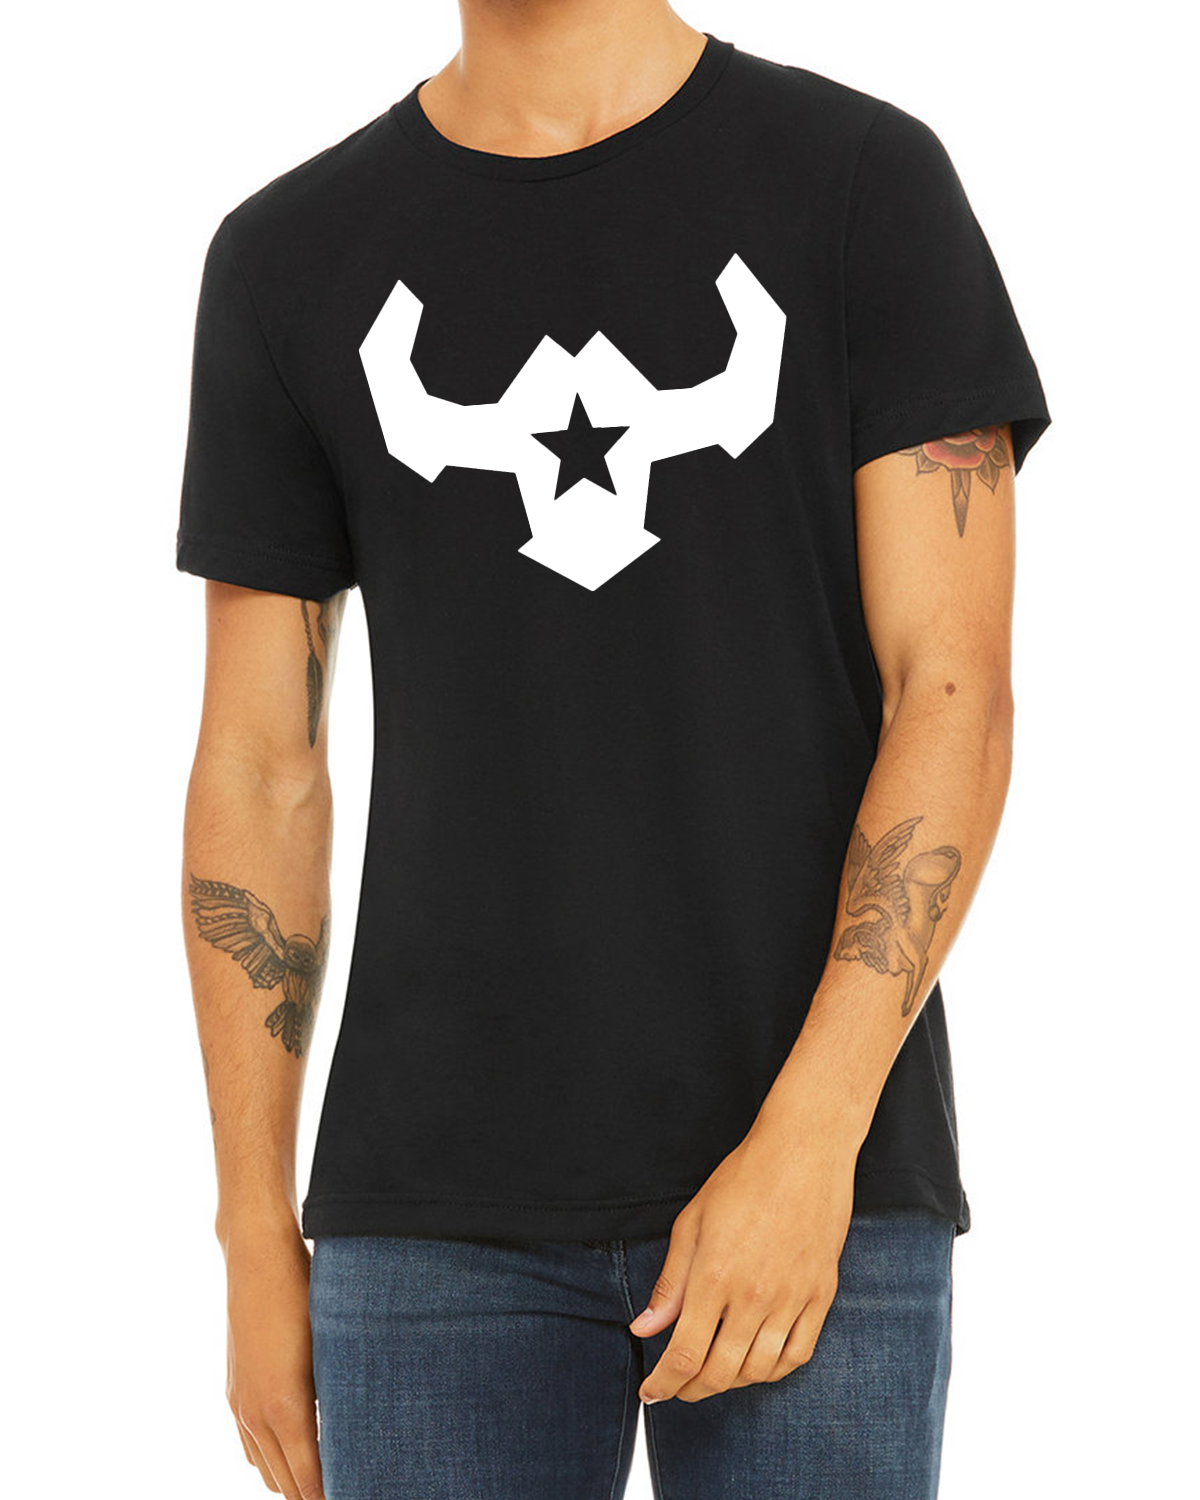 Original VQRO Bull Chest Emblem Black T-Shirt Affordable Custom Apparel